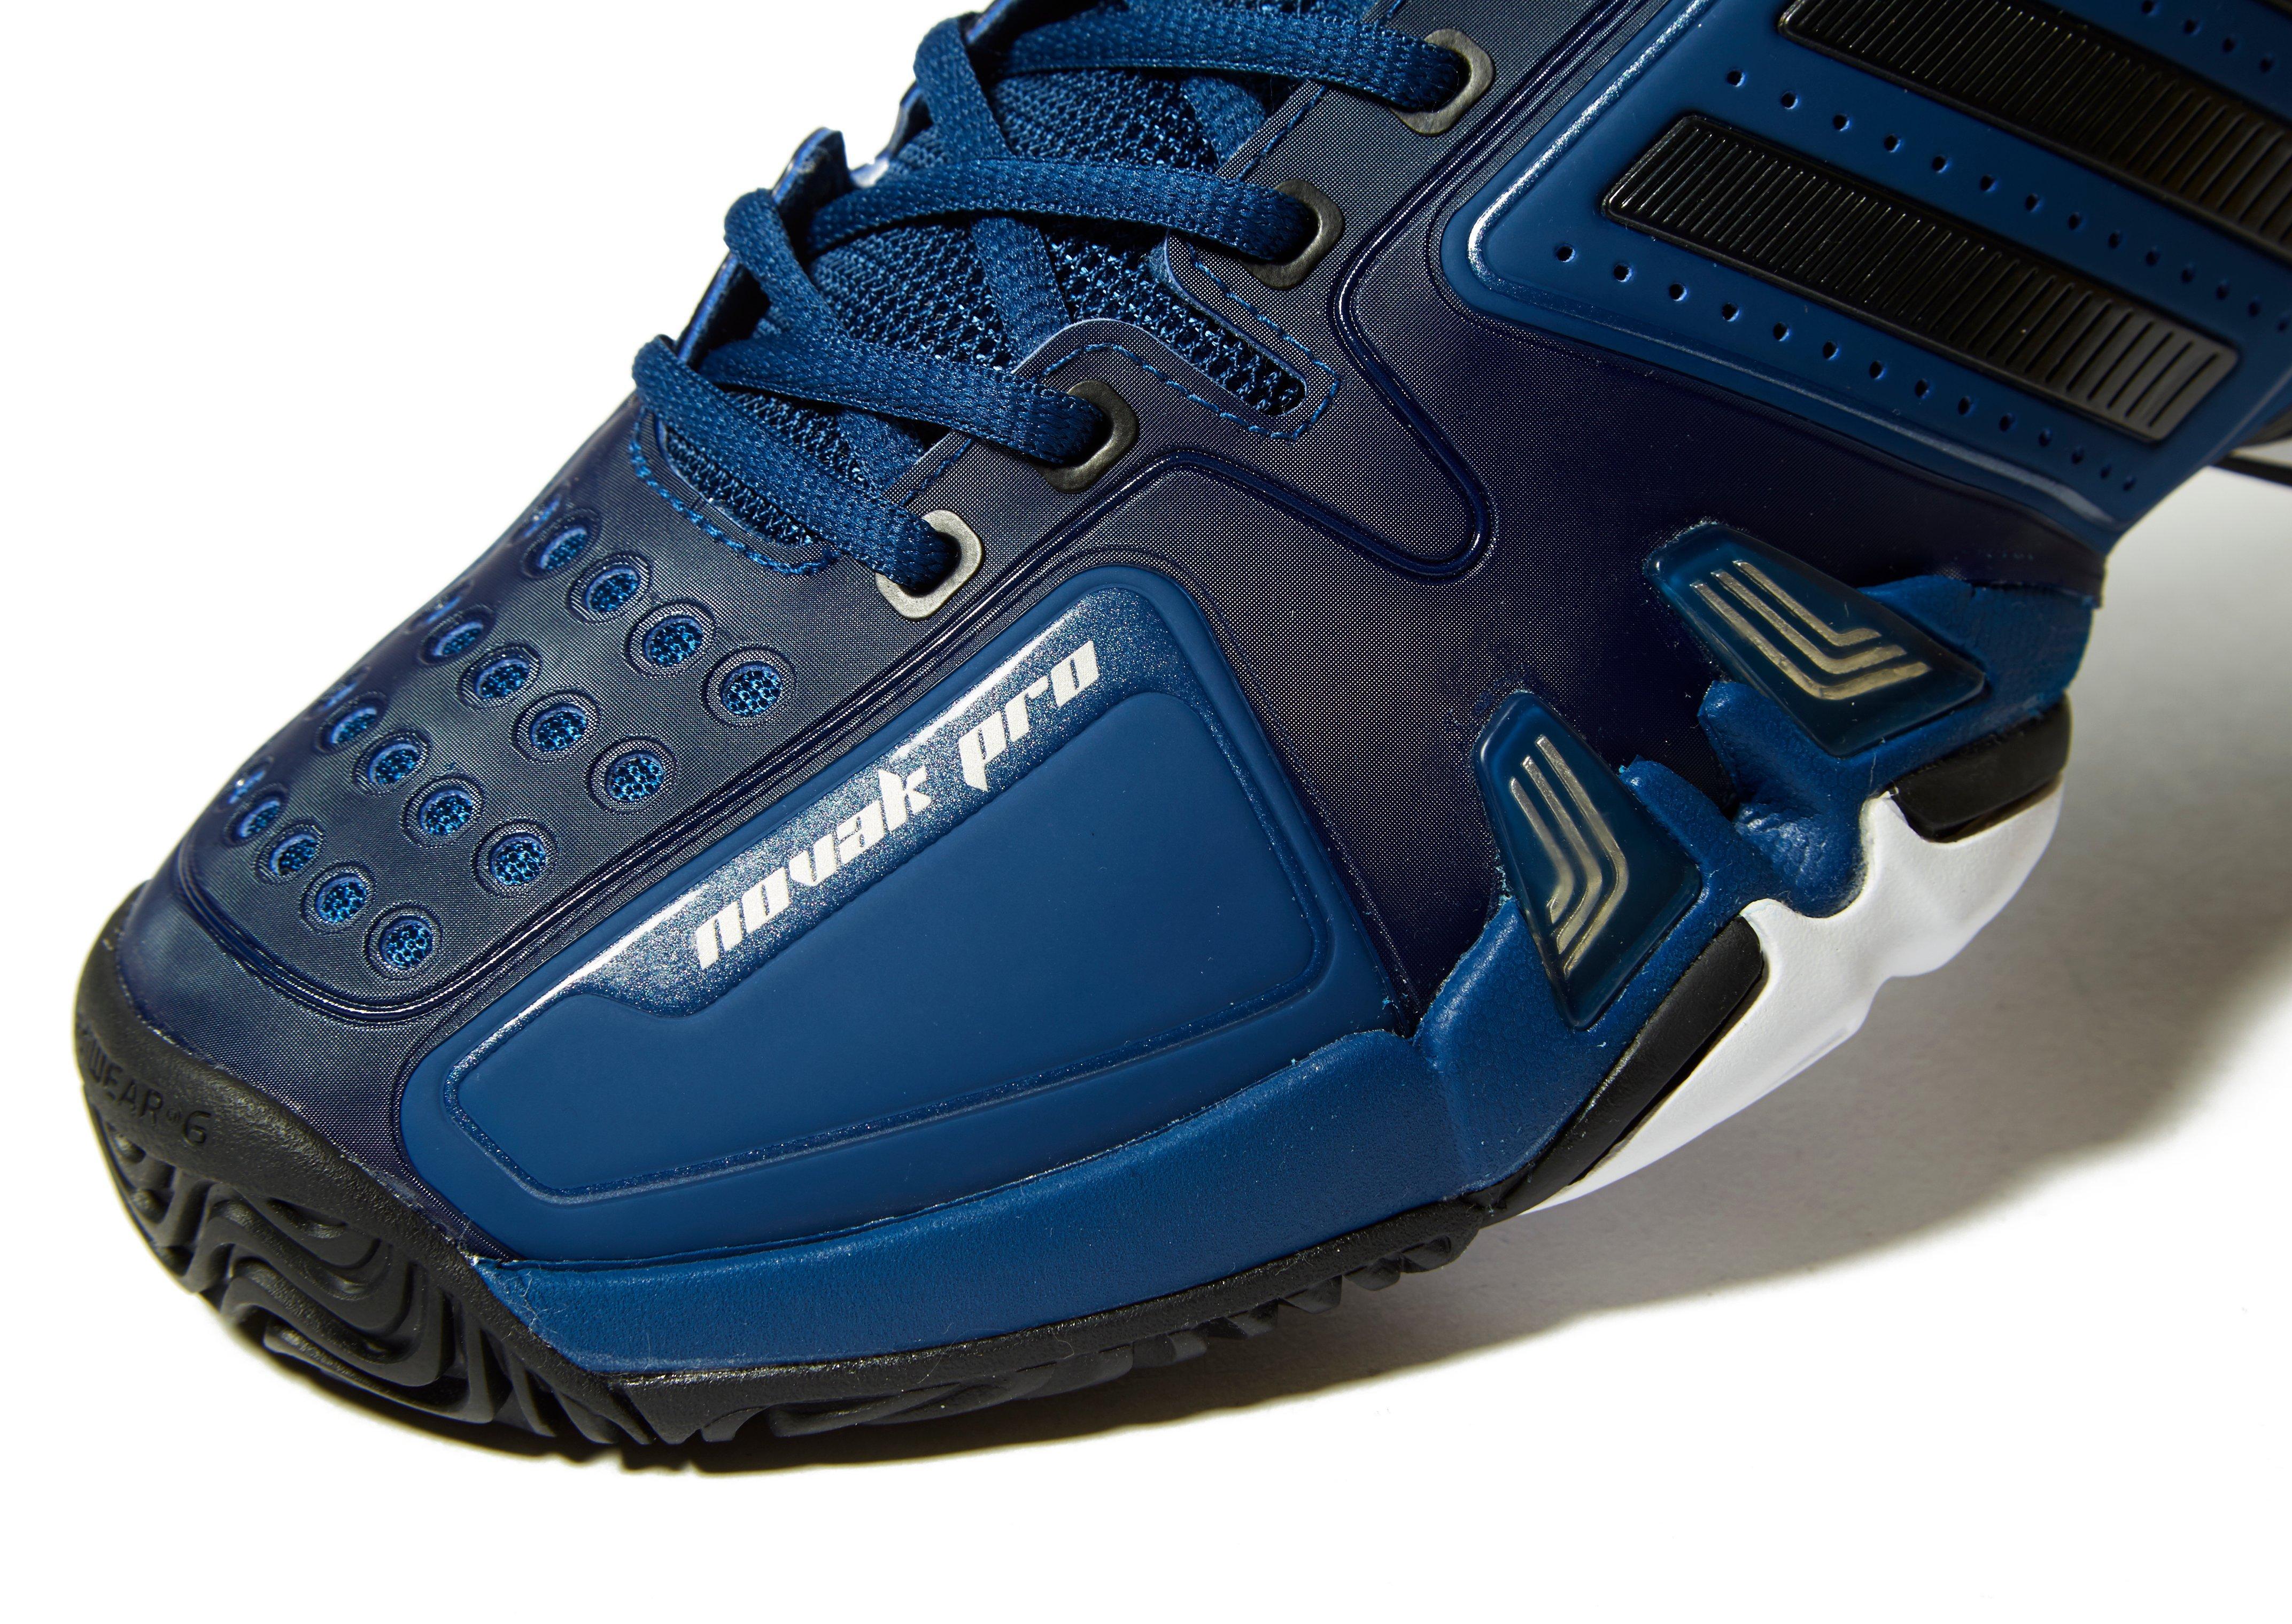 adidas Novak Djokovic Pro Shoes in Blue/Blue (Blue) for Men  Lyst